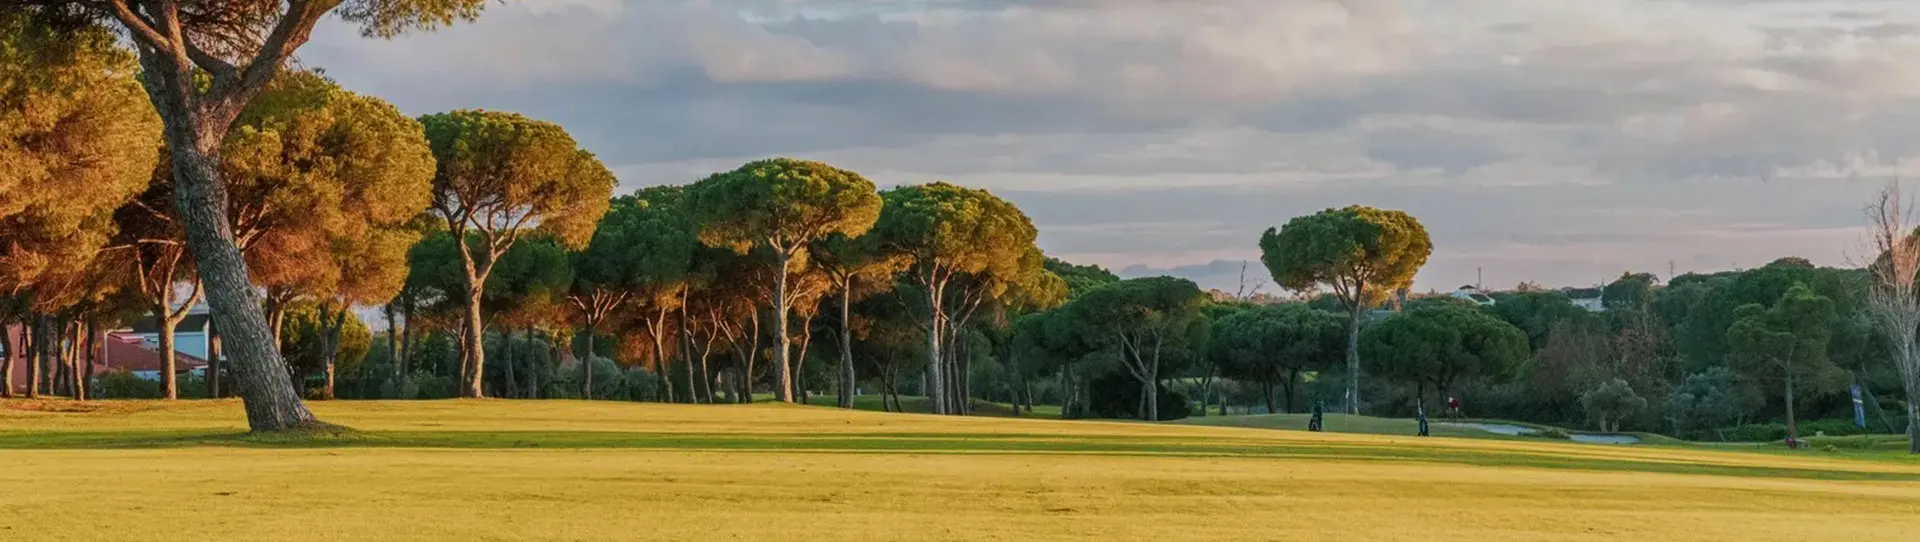 Spain golf courses - Bellavista Golf Club - Photo 3